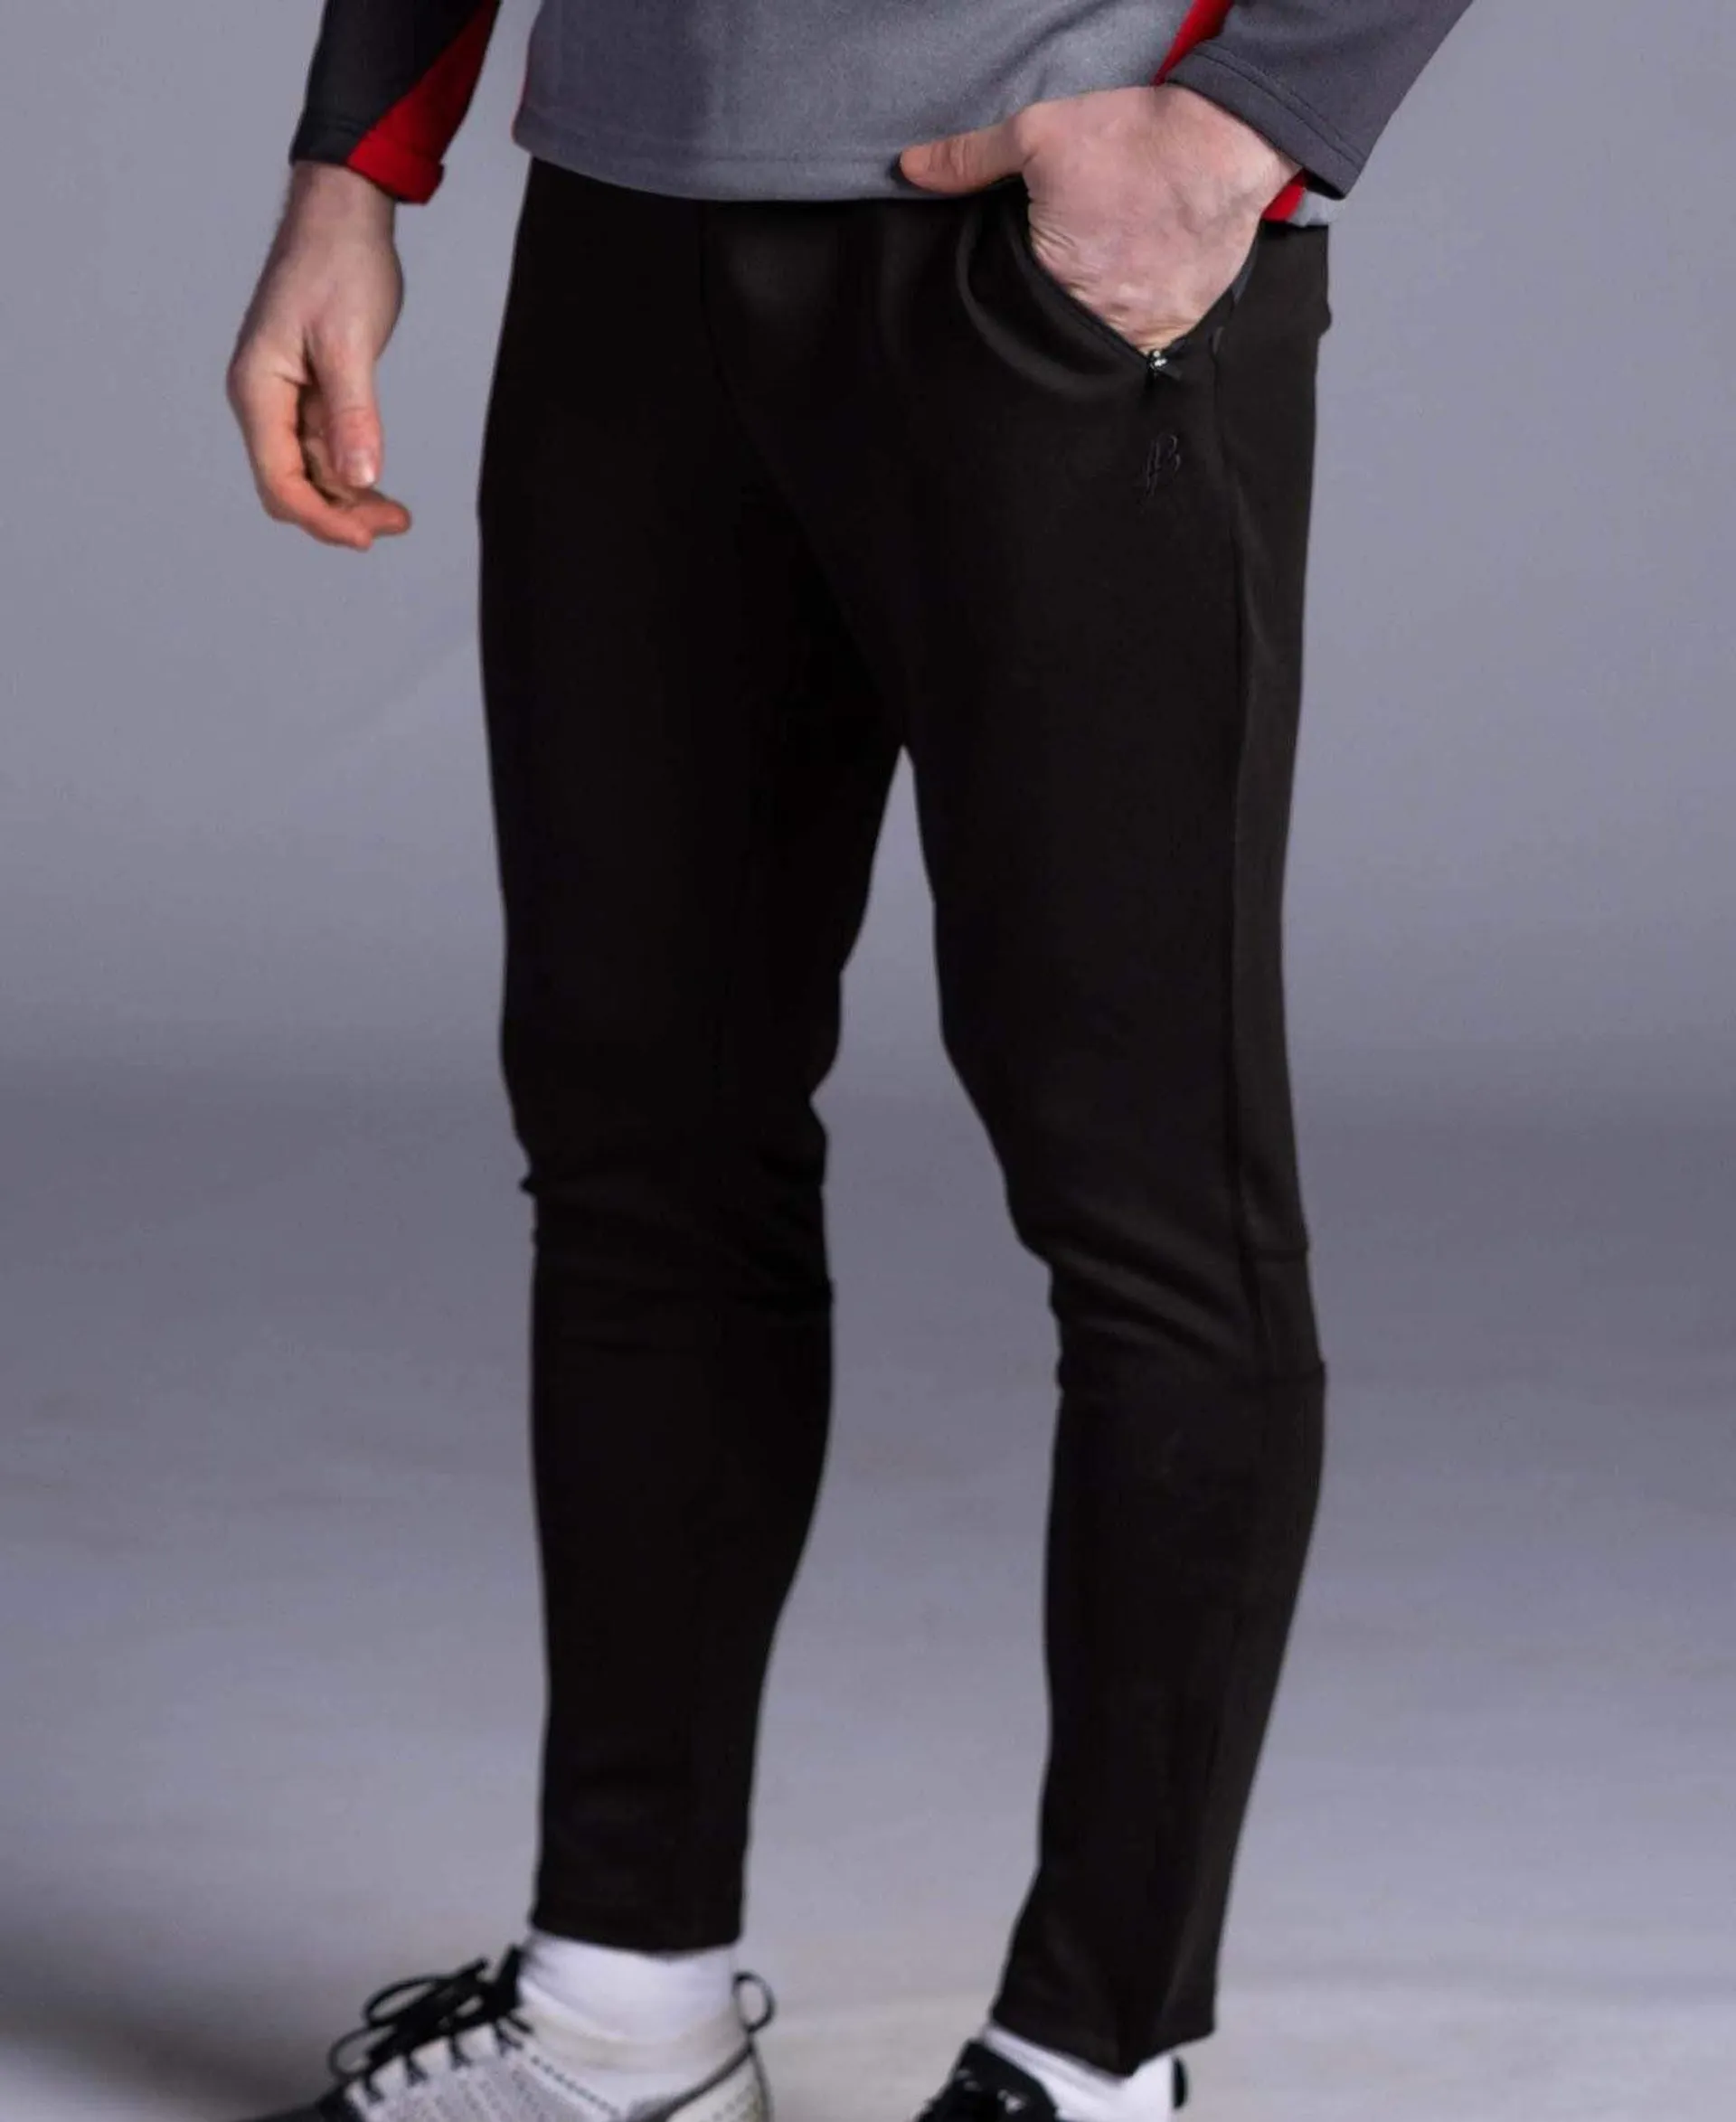 BUA20 Adult Skinny Pants (Black)